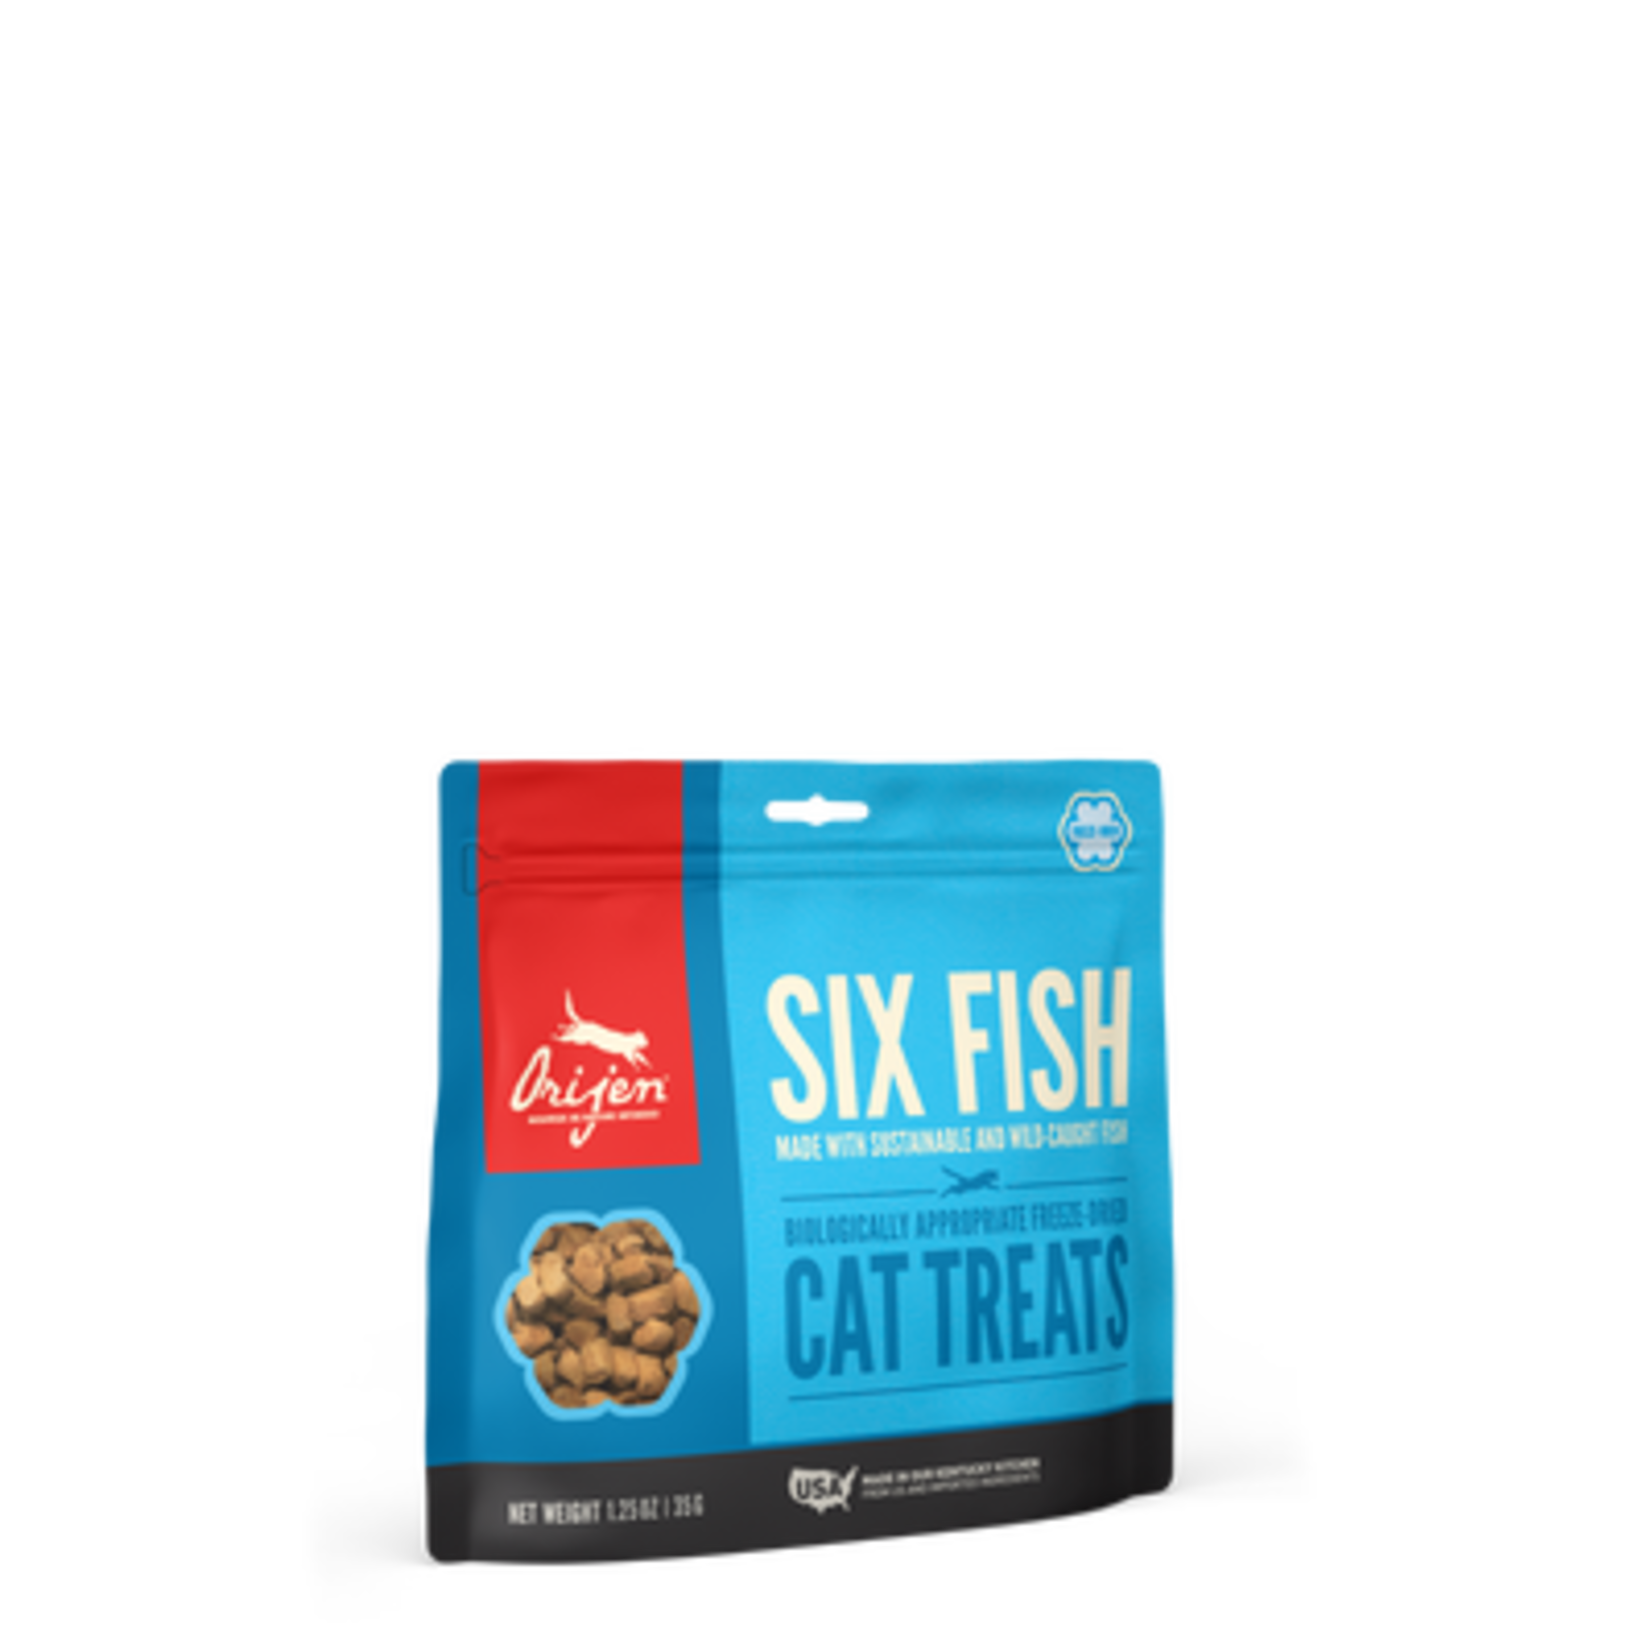 Orijen Orijen Freeze Dried Cat Treats 6 Fish Recipe with Sustainable & Wild-Caught Fish Mackerel, Flounder, Monkfish, Herring, Redfish, & Hake1.25oz